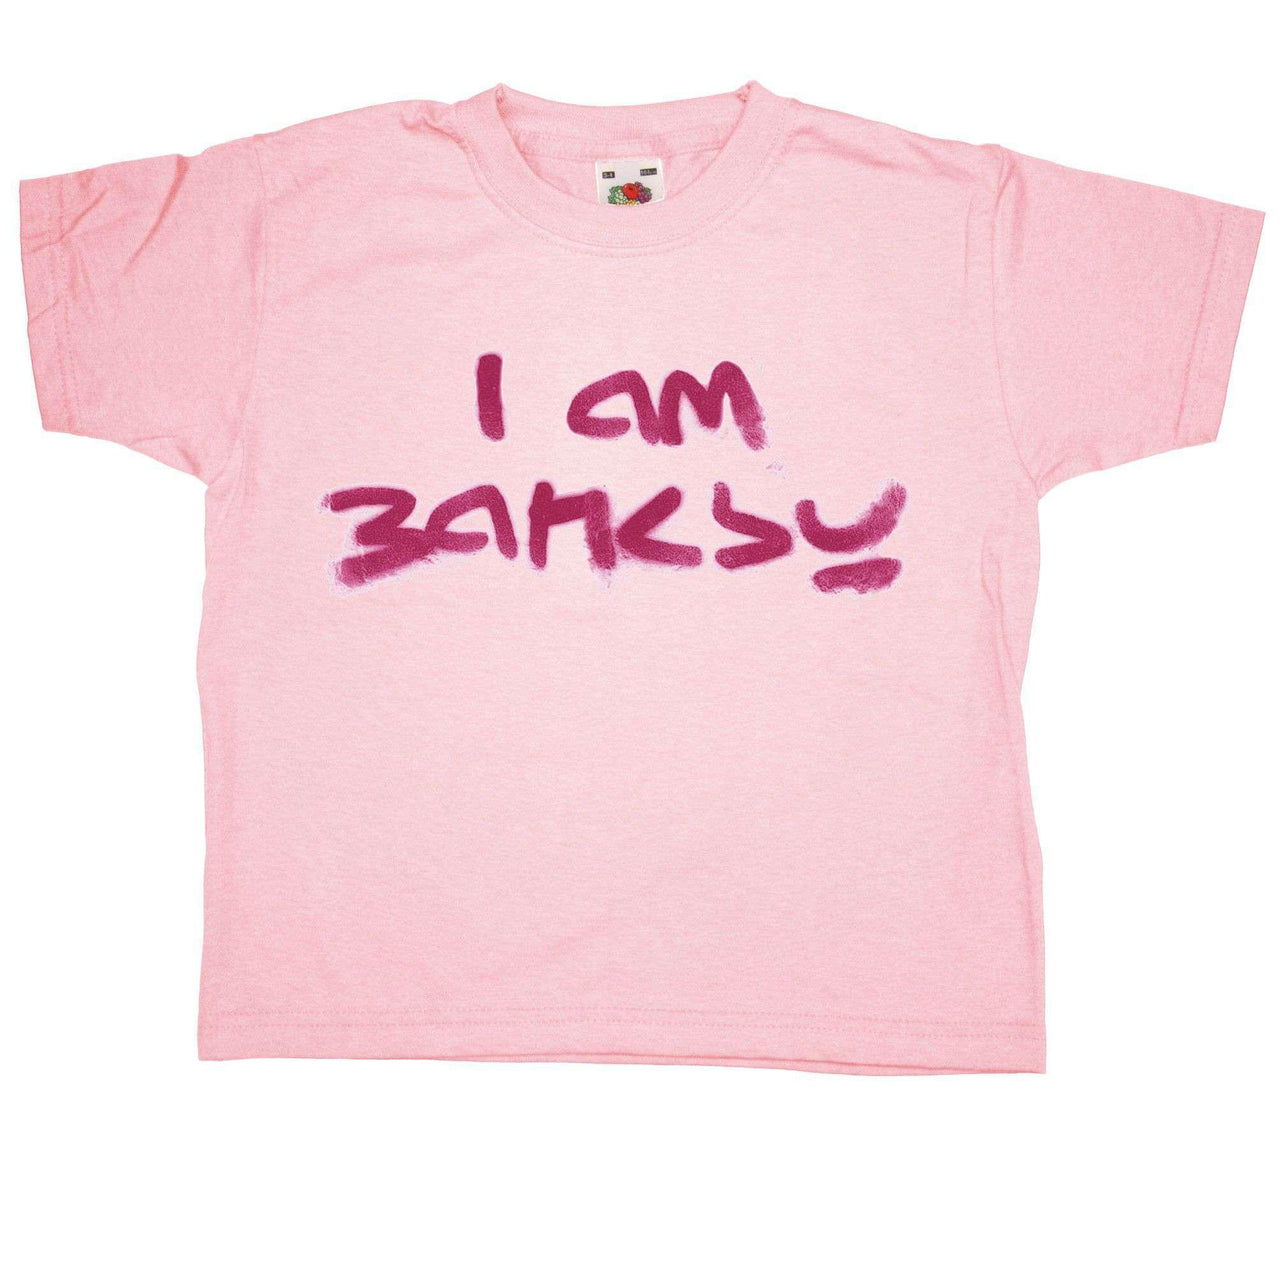 Banksy I Am Banksy Childrens T-Shirt 8Ball